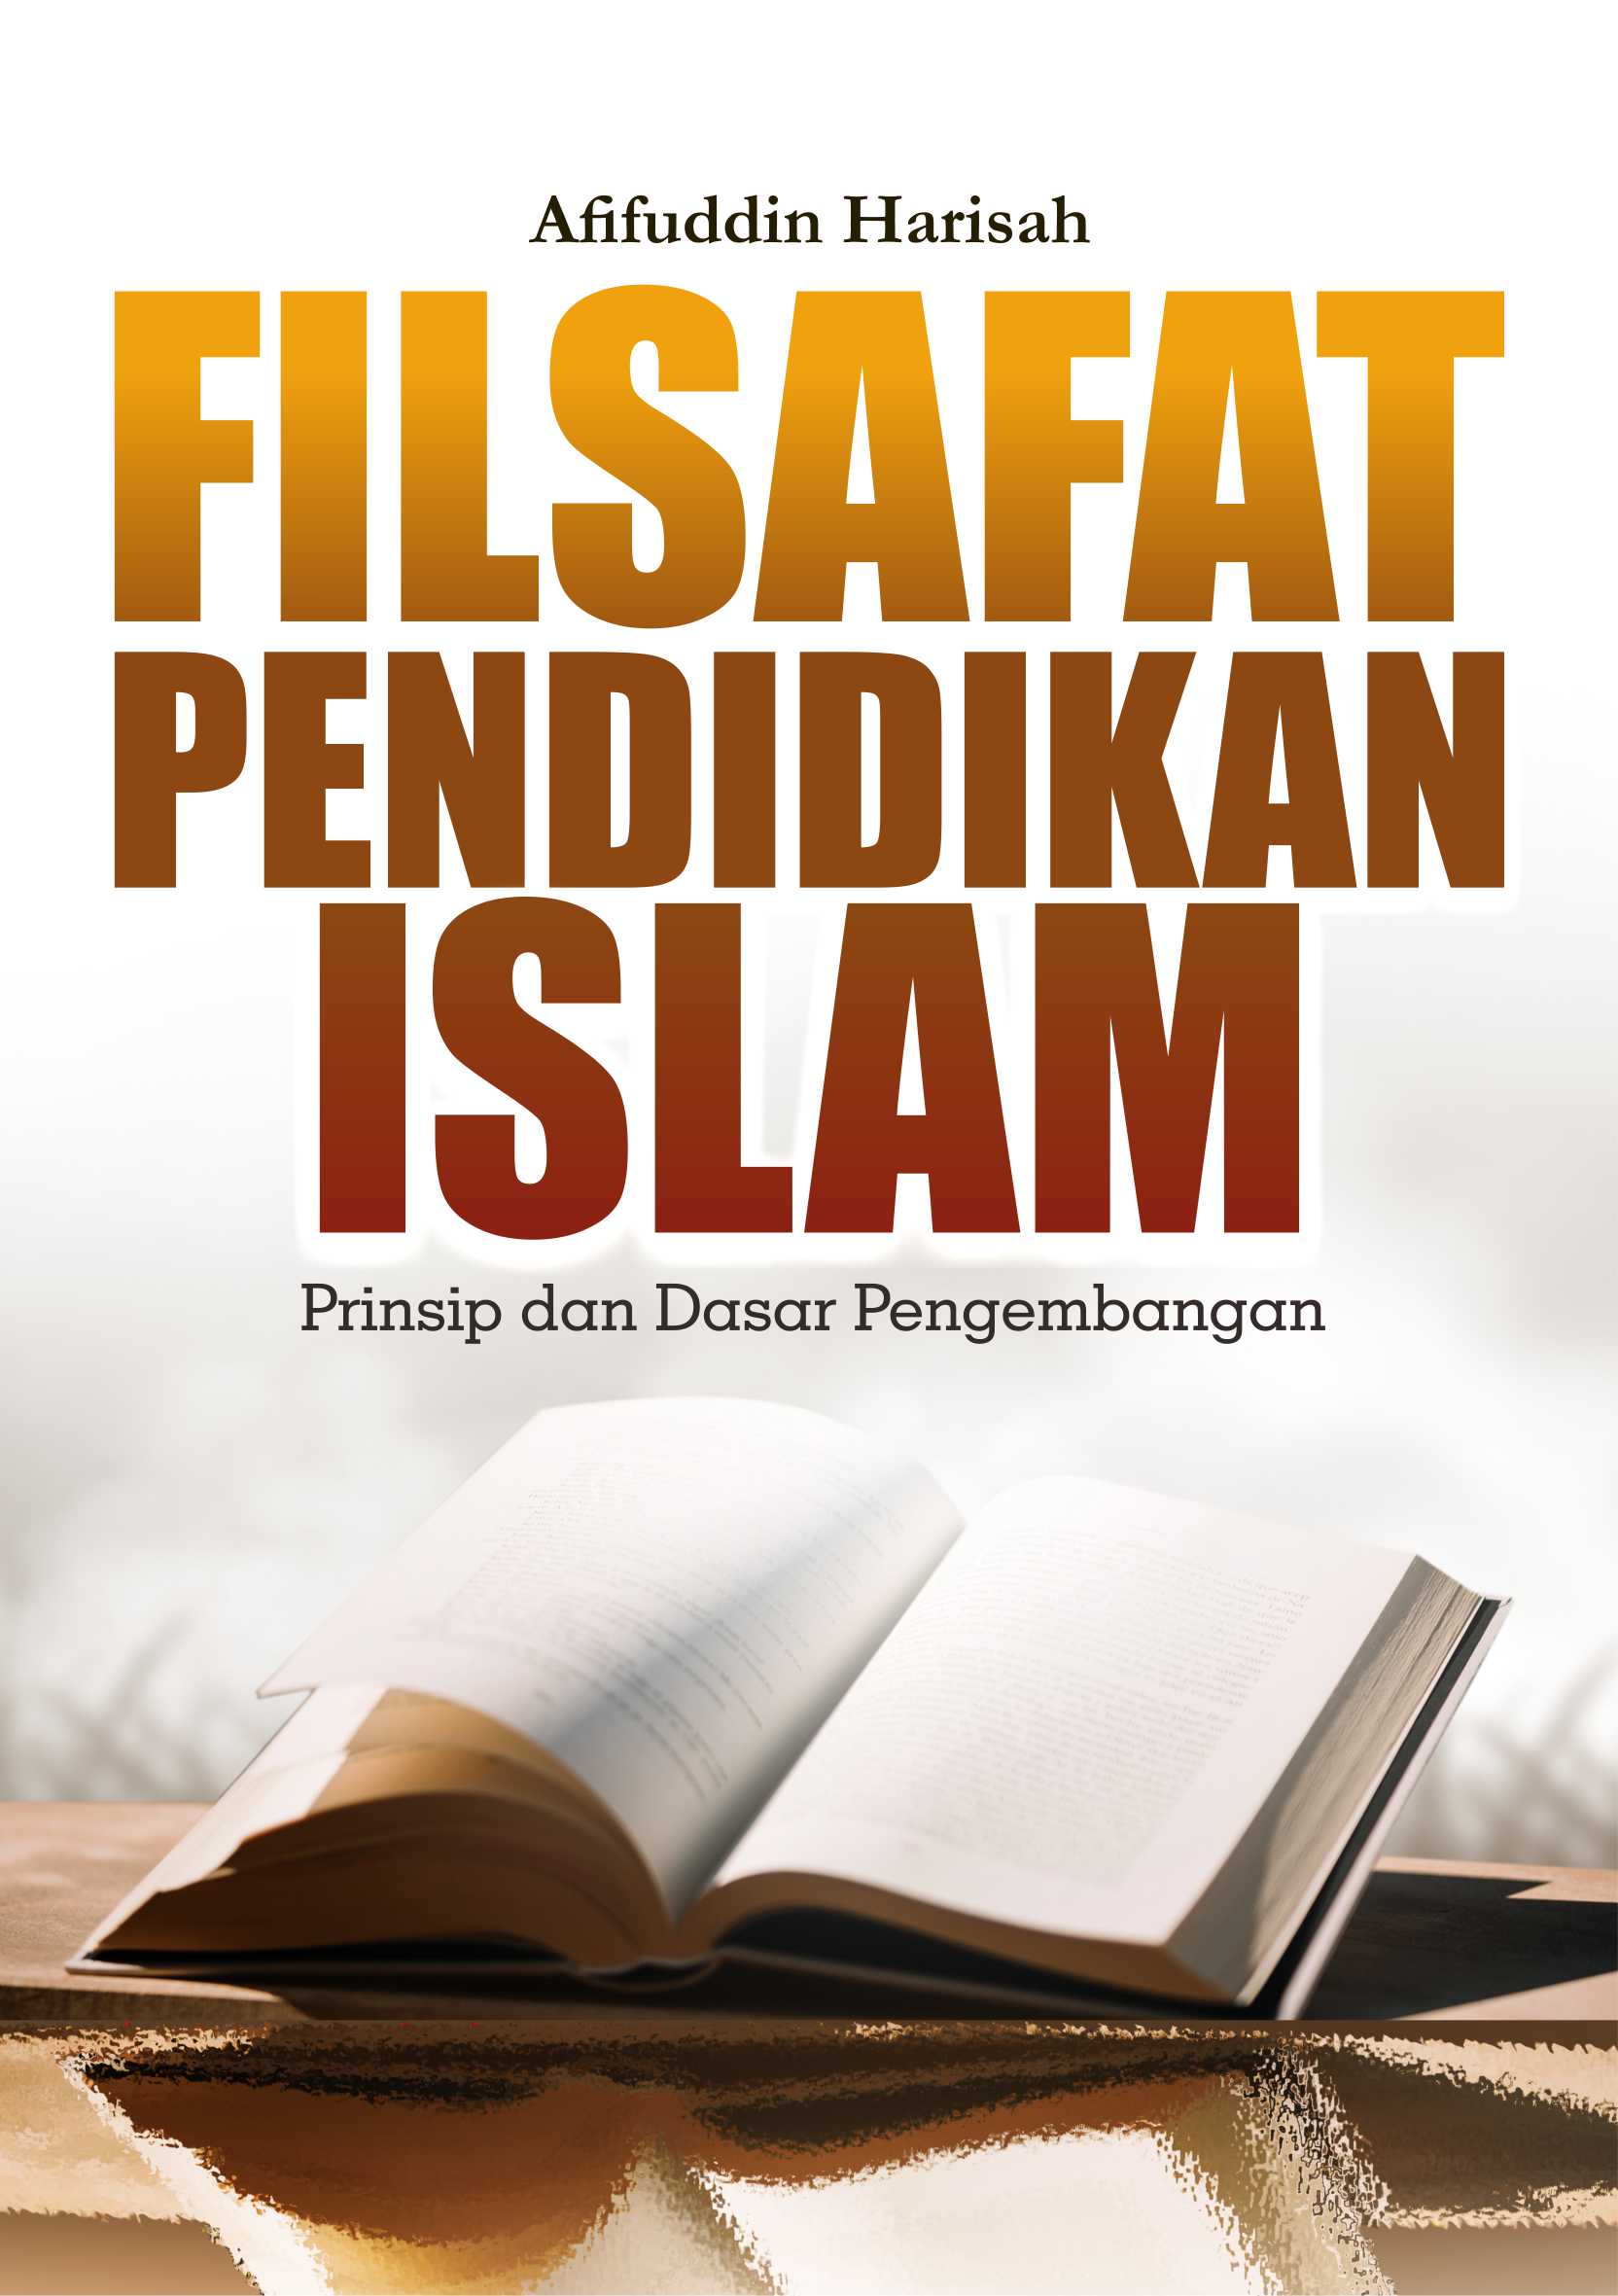 buku filsafat hukum islam pdf